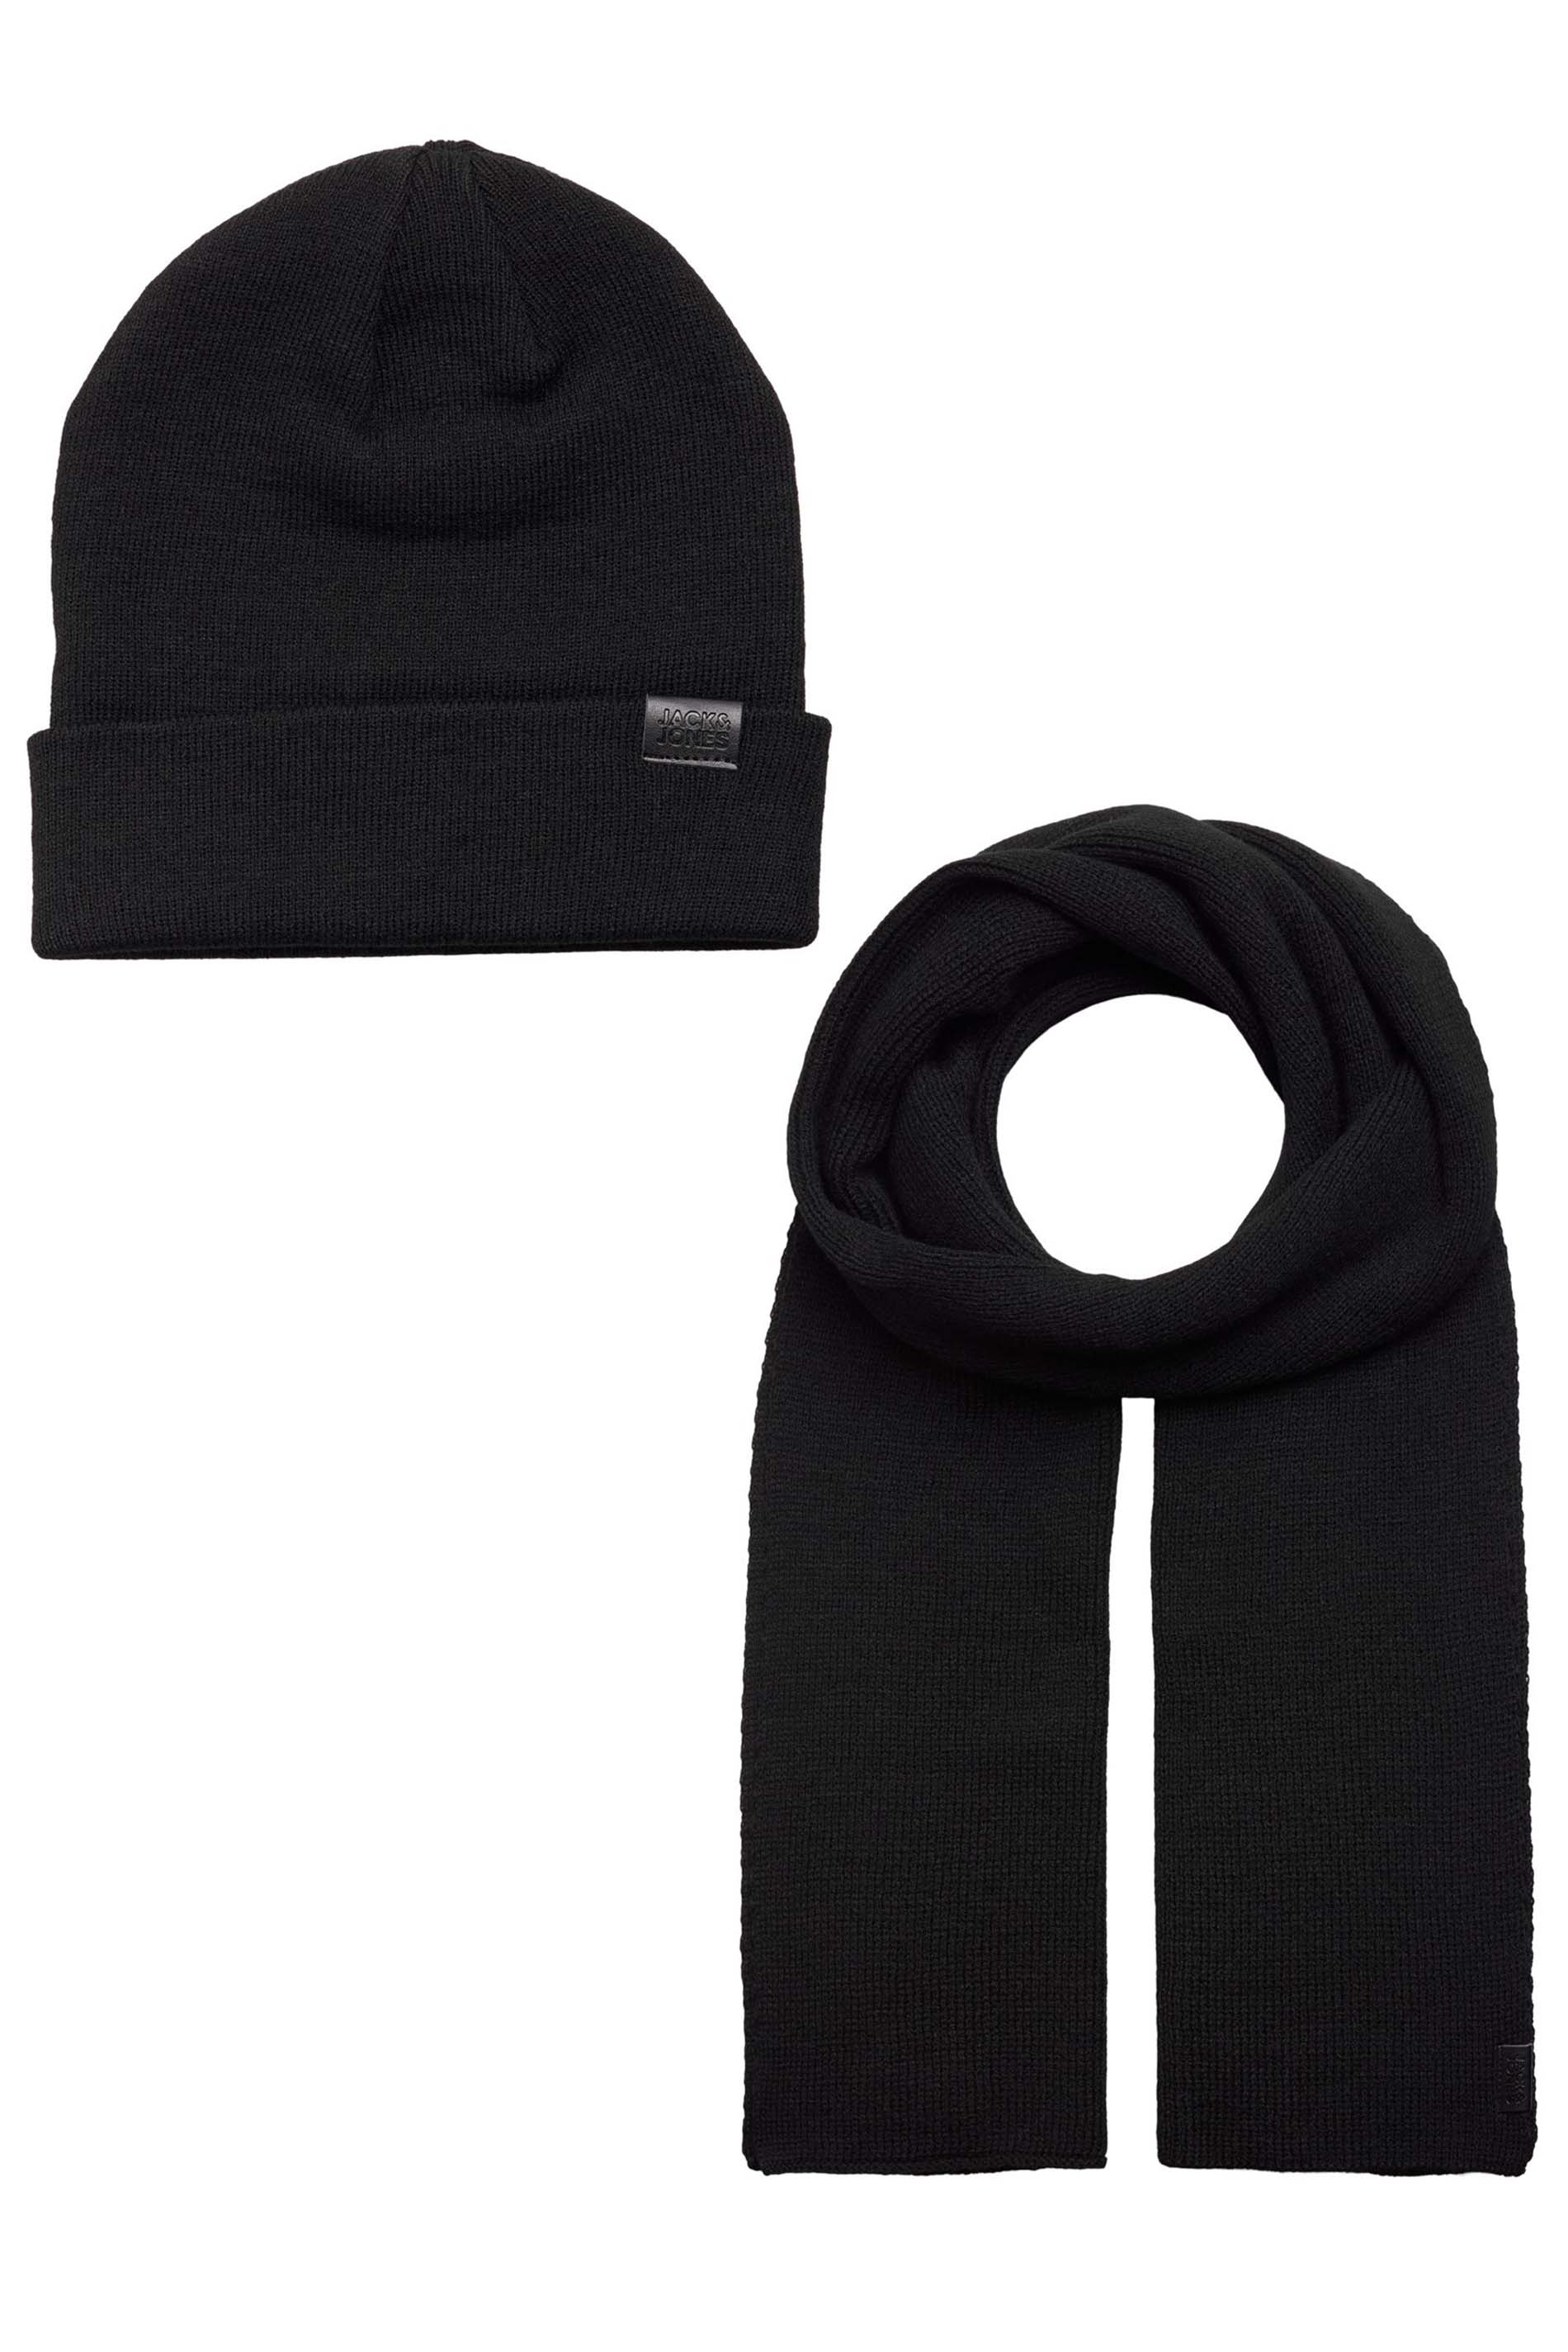 JACK & JONES Black Beanie Hat & Scarf Gift Set | BadRhino 1